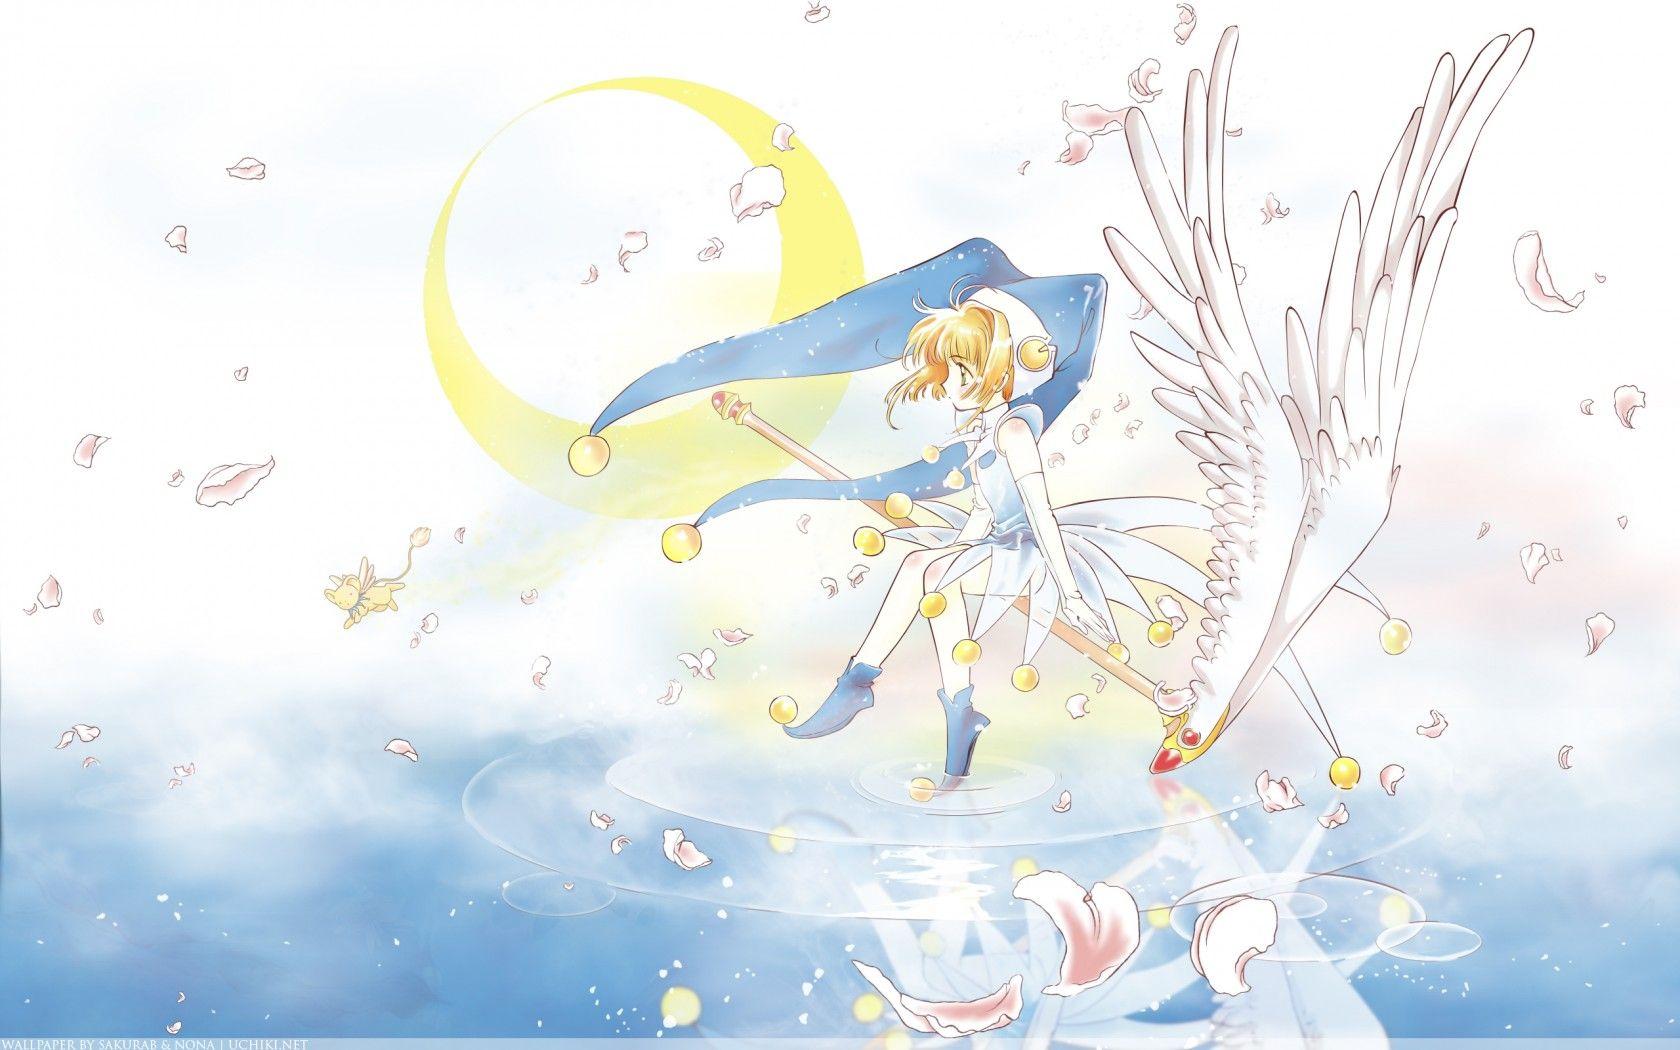 Card Captor Sakura. Free Anime Wallpaper Site